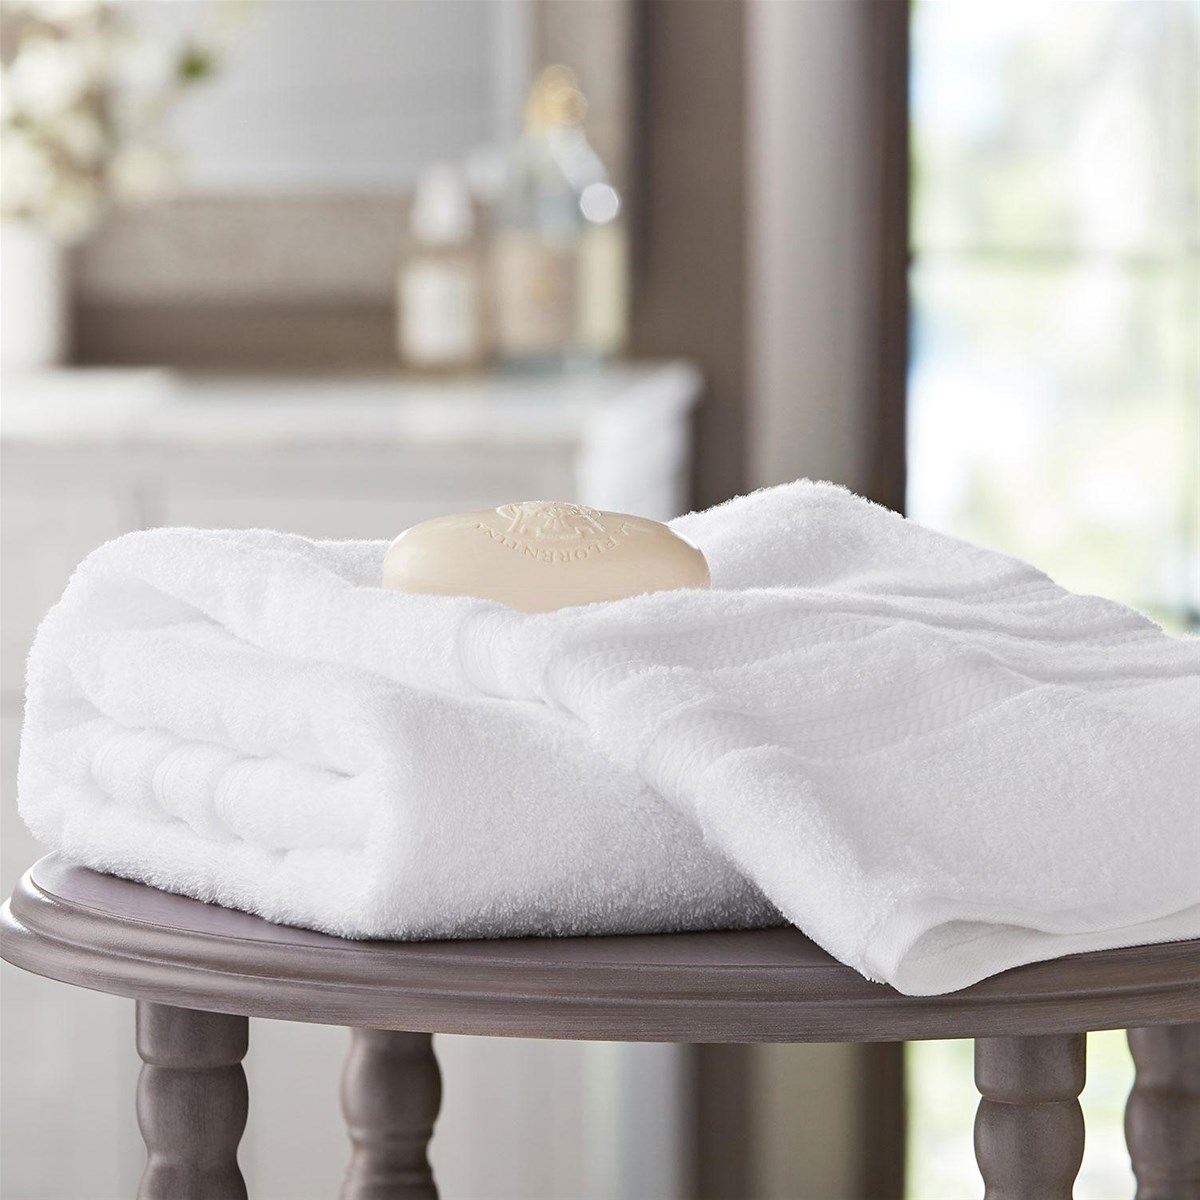 Hotel Bath towel for Hospitality Bedding